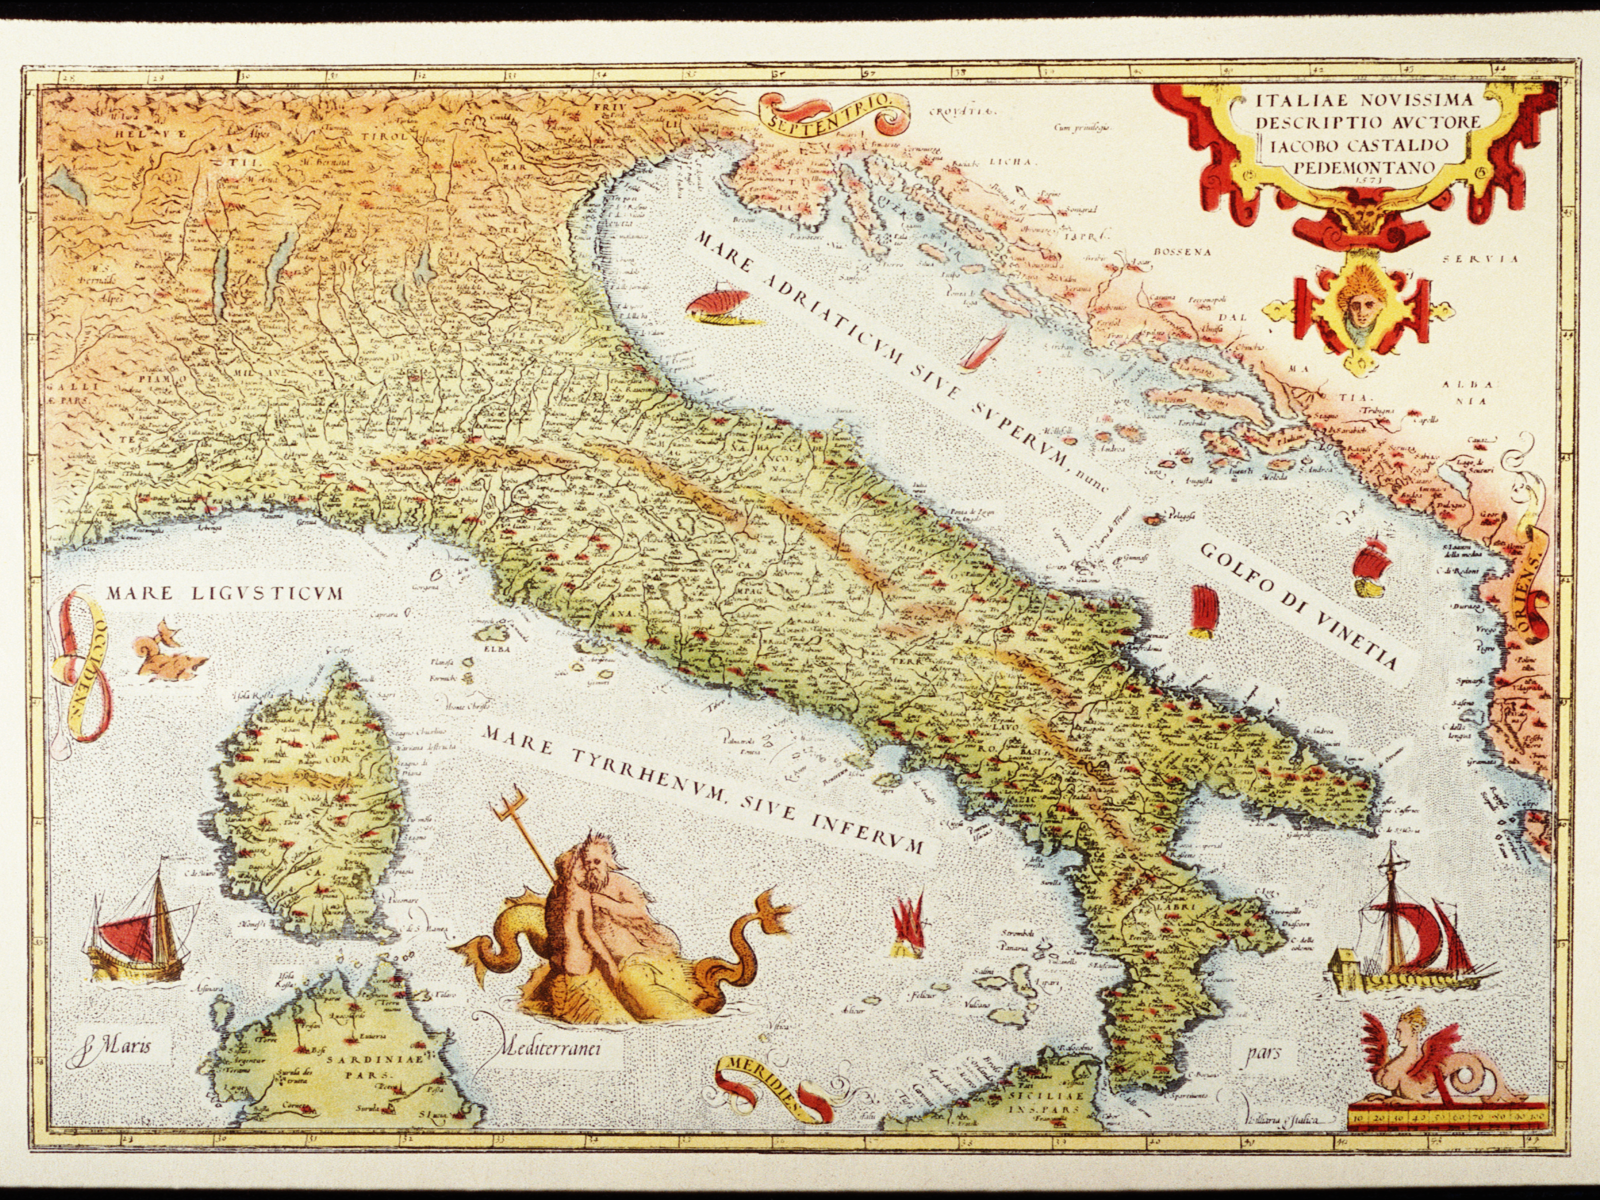 http://3.bp.blogspot.com/_UeKpPmoedmk/THj1sX5P70I/AAAAAAAAAfw/oBZqJA5d6bo/s1600/Antique+Map+of+Italy+1573_the+long+goodbye.png